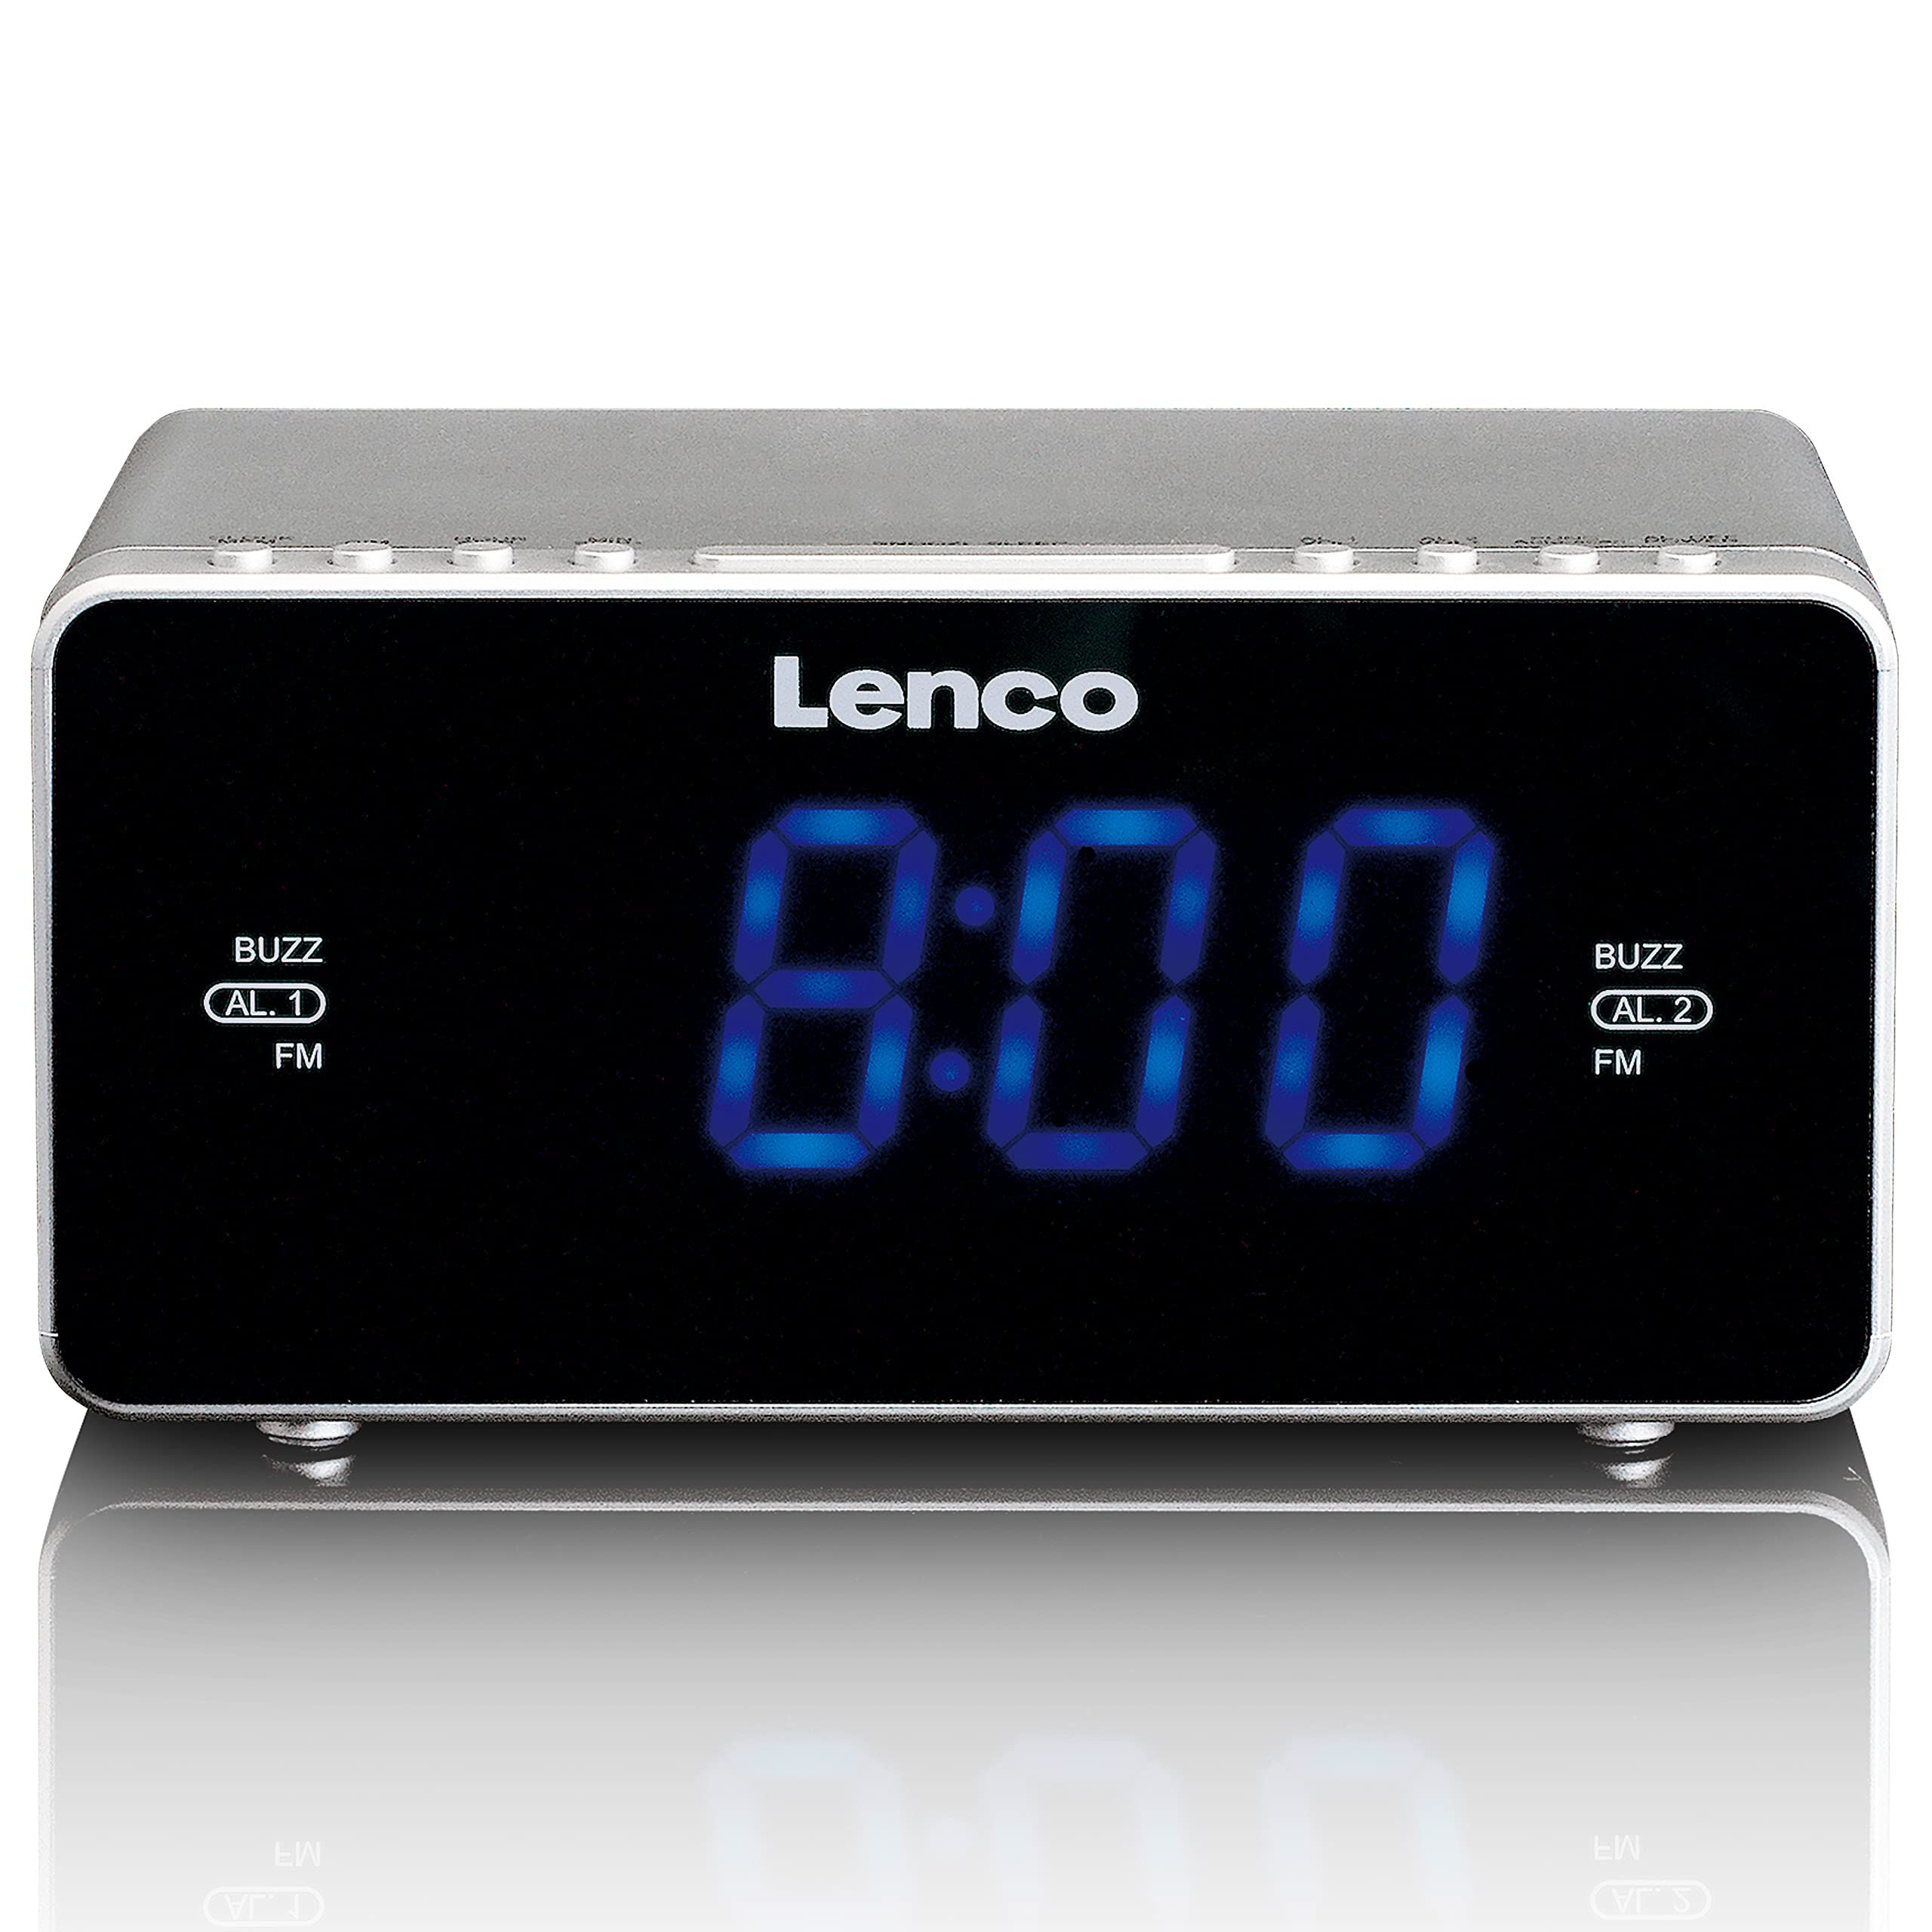 Lenco CR-520 Stereo Uhrenradio mit 2 Weckzeiten, 1,2 Zoll LED Display, dimmbar, Sleep-Timer, Schlummerfunktion, USB-Lader, silber